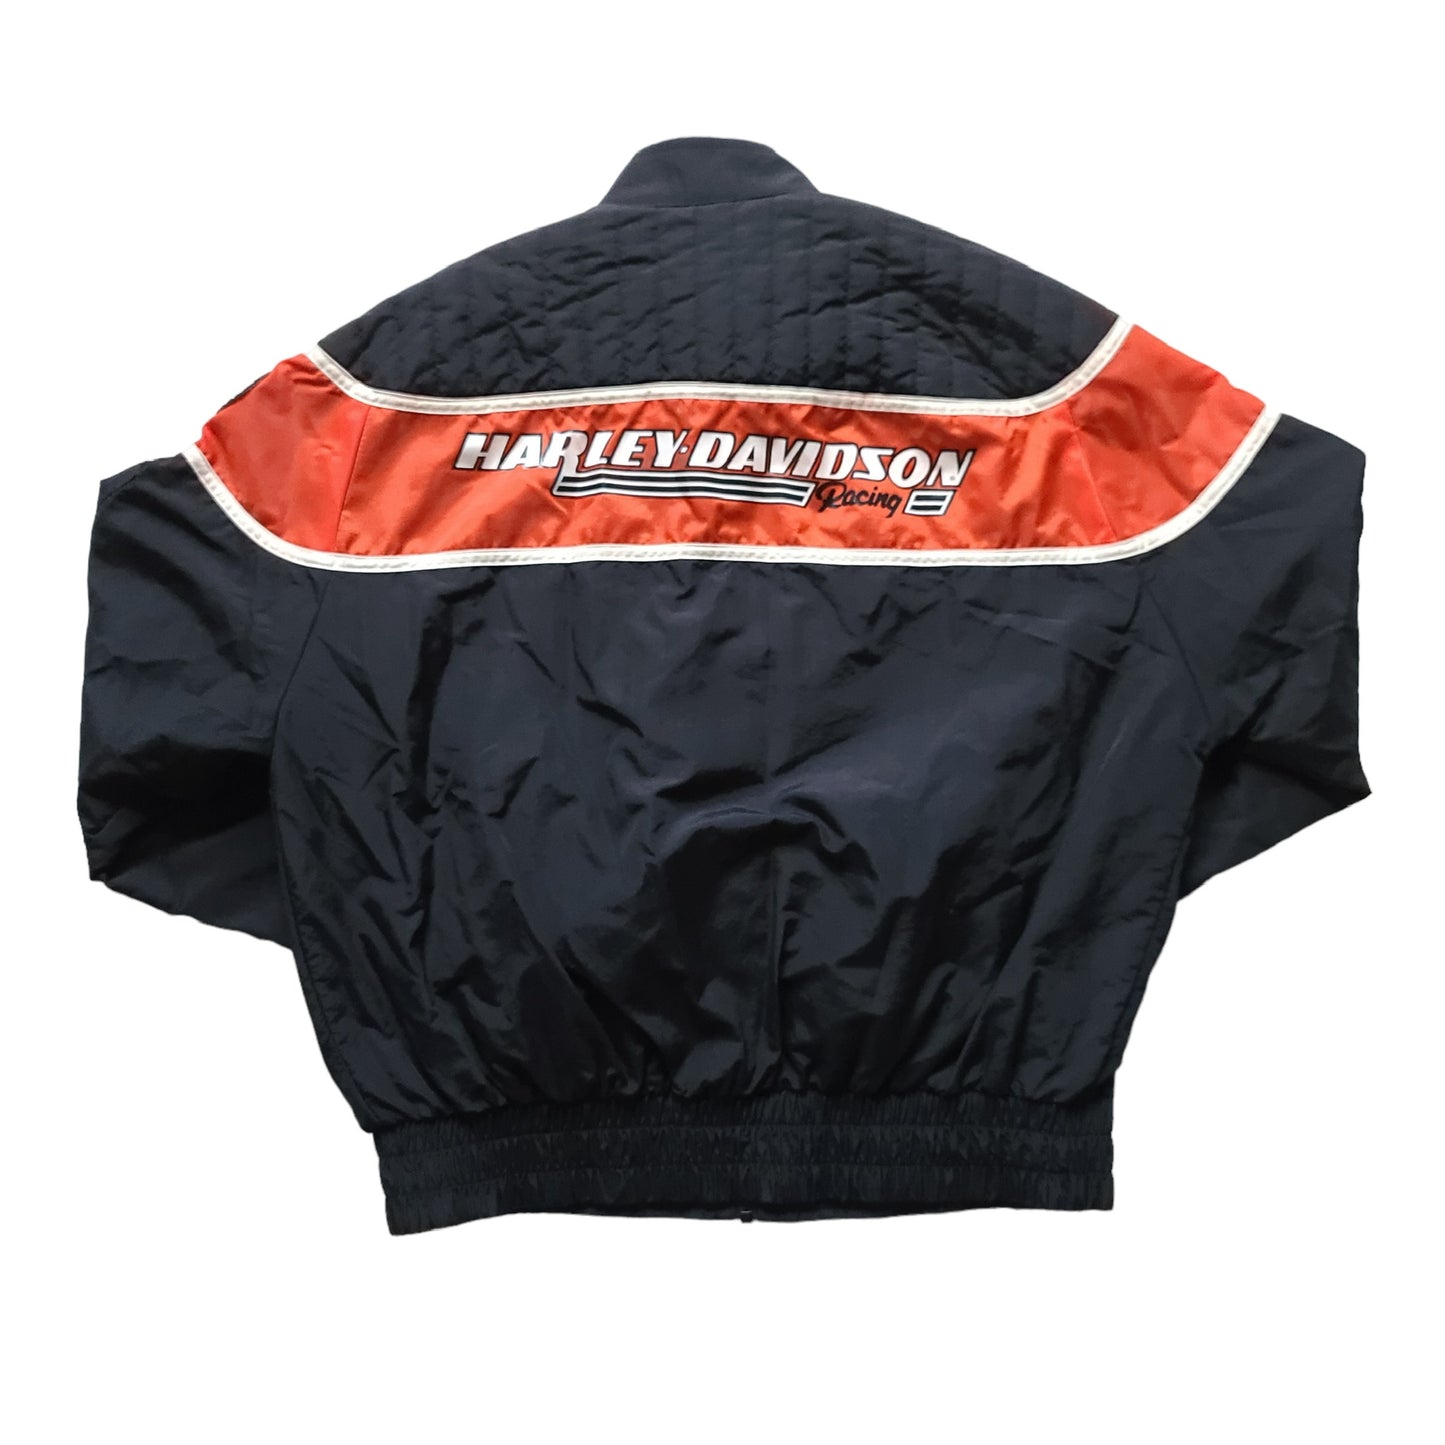 Harley Davidson Racing Black Windbreaker Jacket